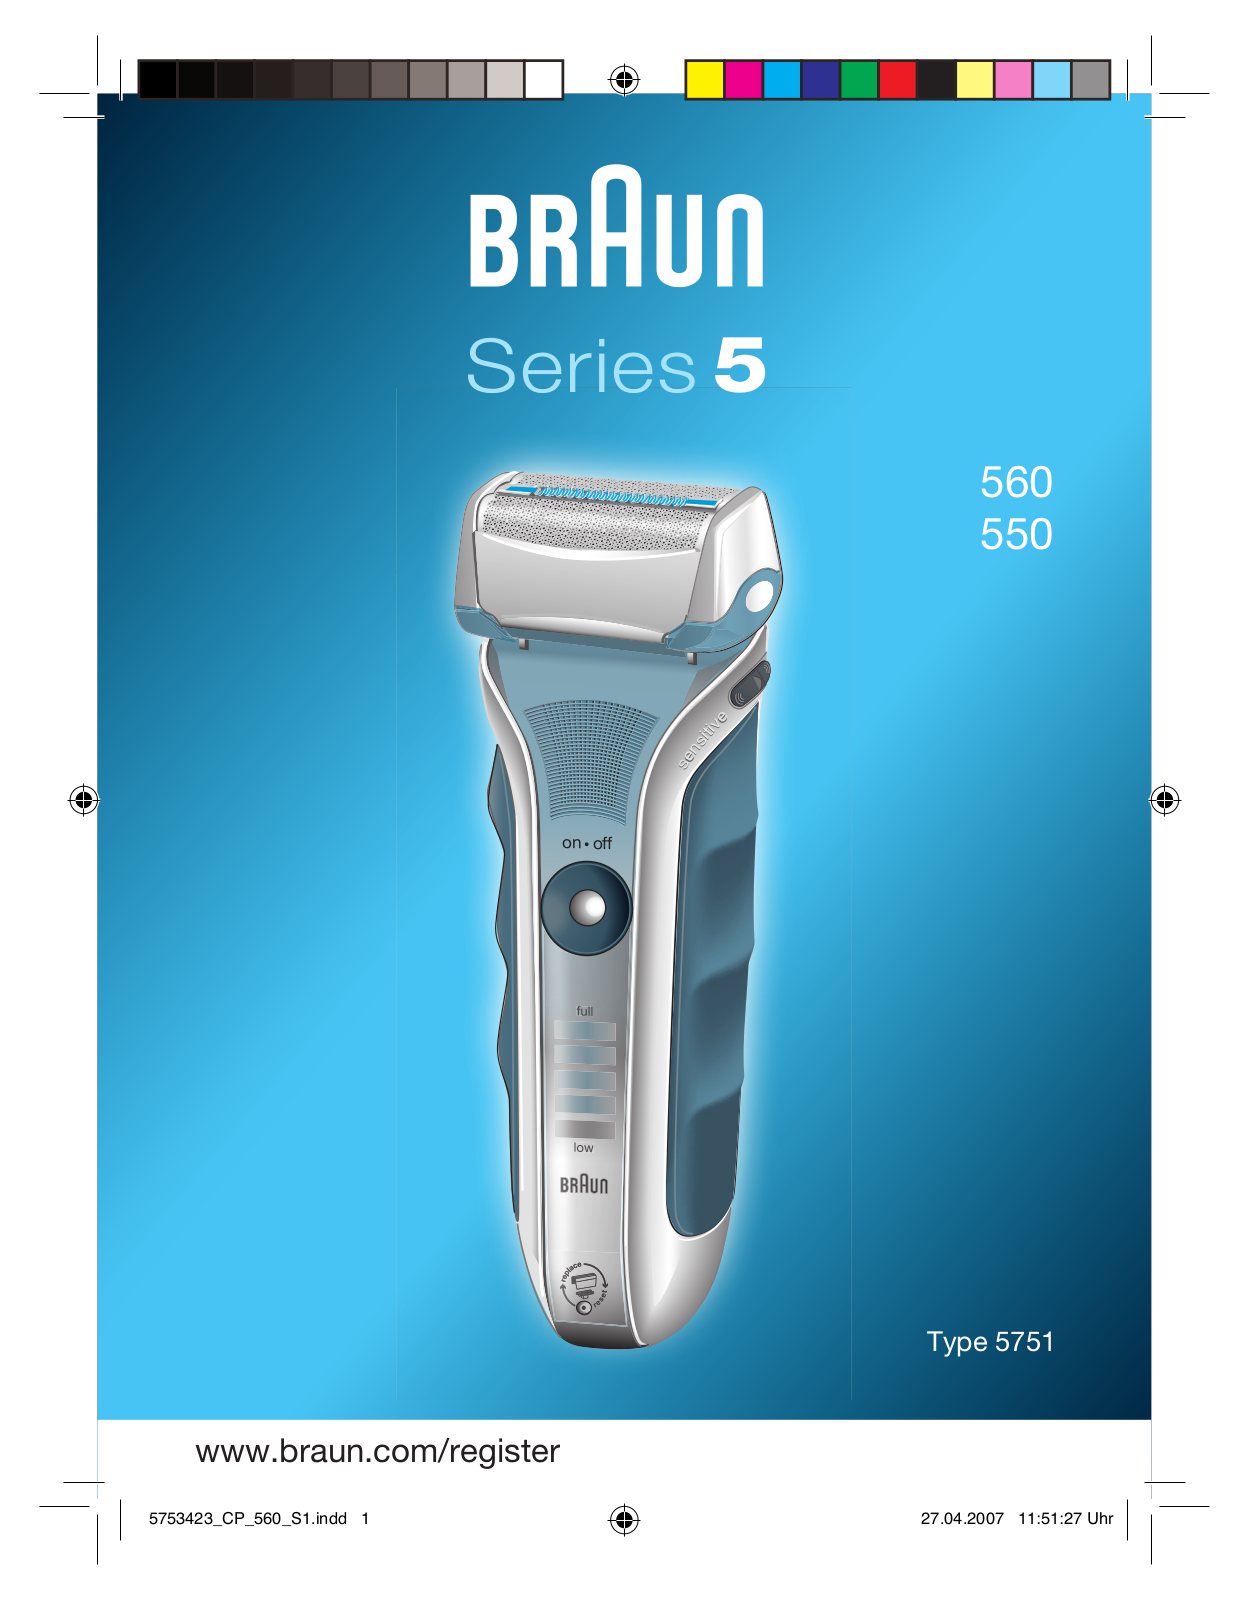 BRAUN 5510 User Manual